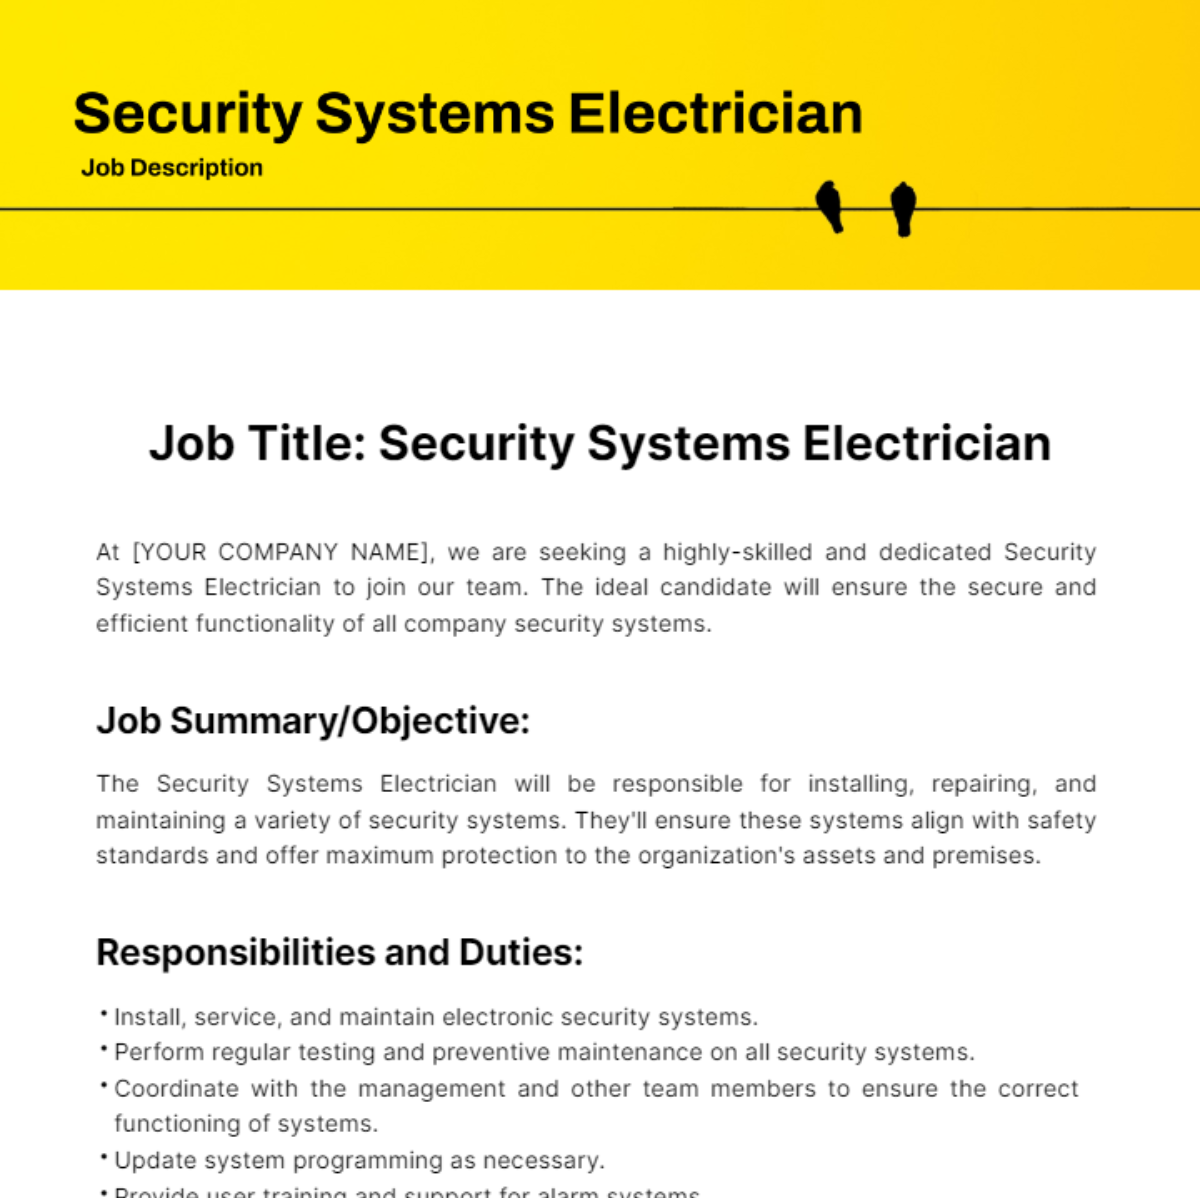 Security Systems Electrician Job Description Template